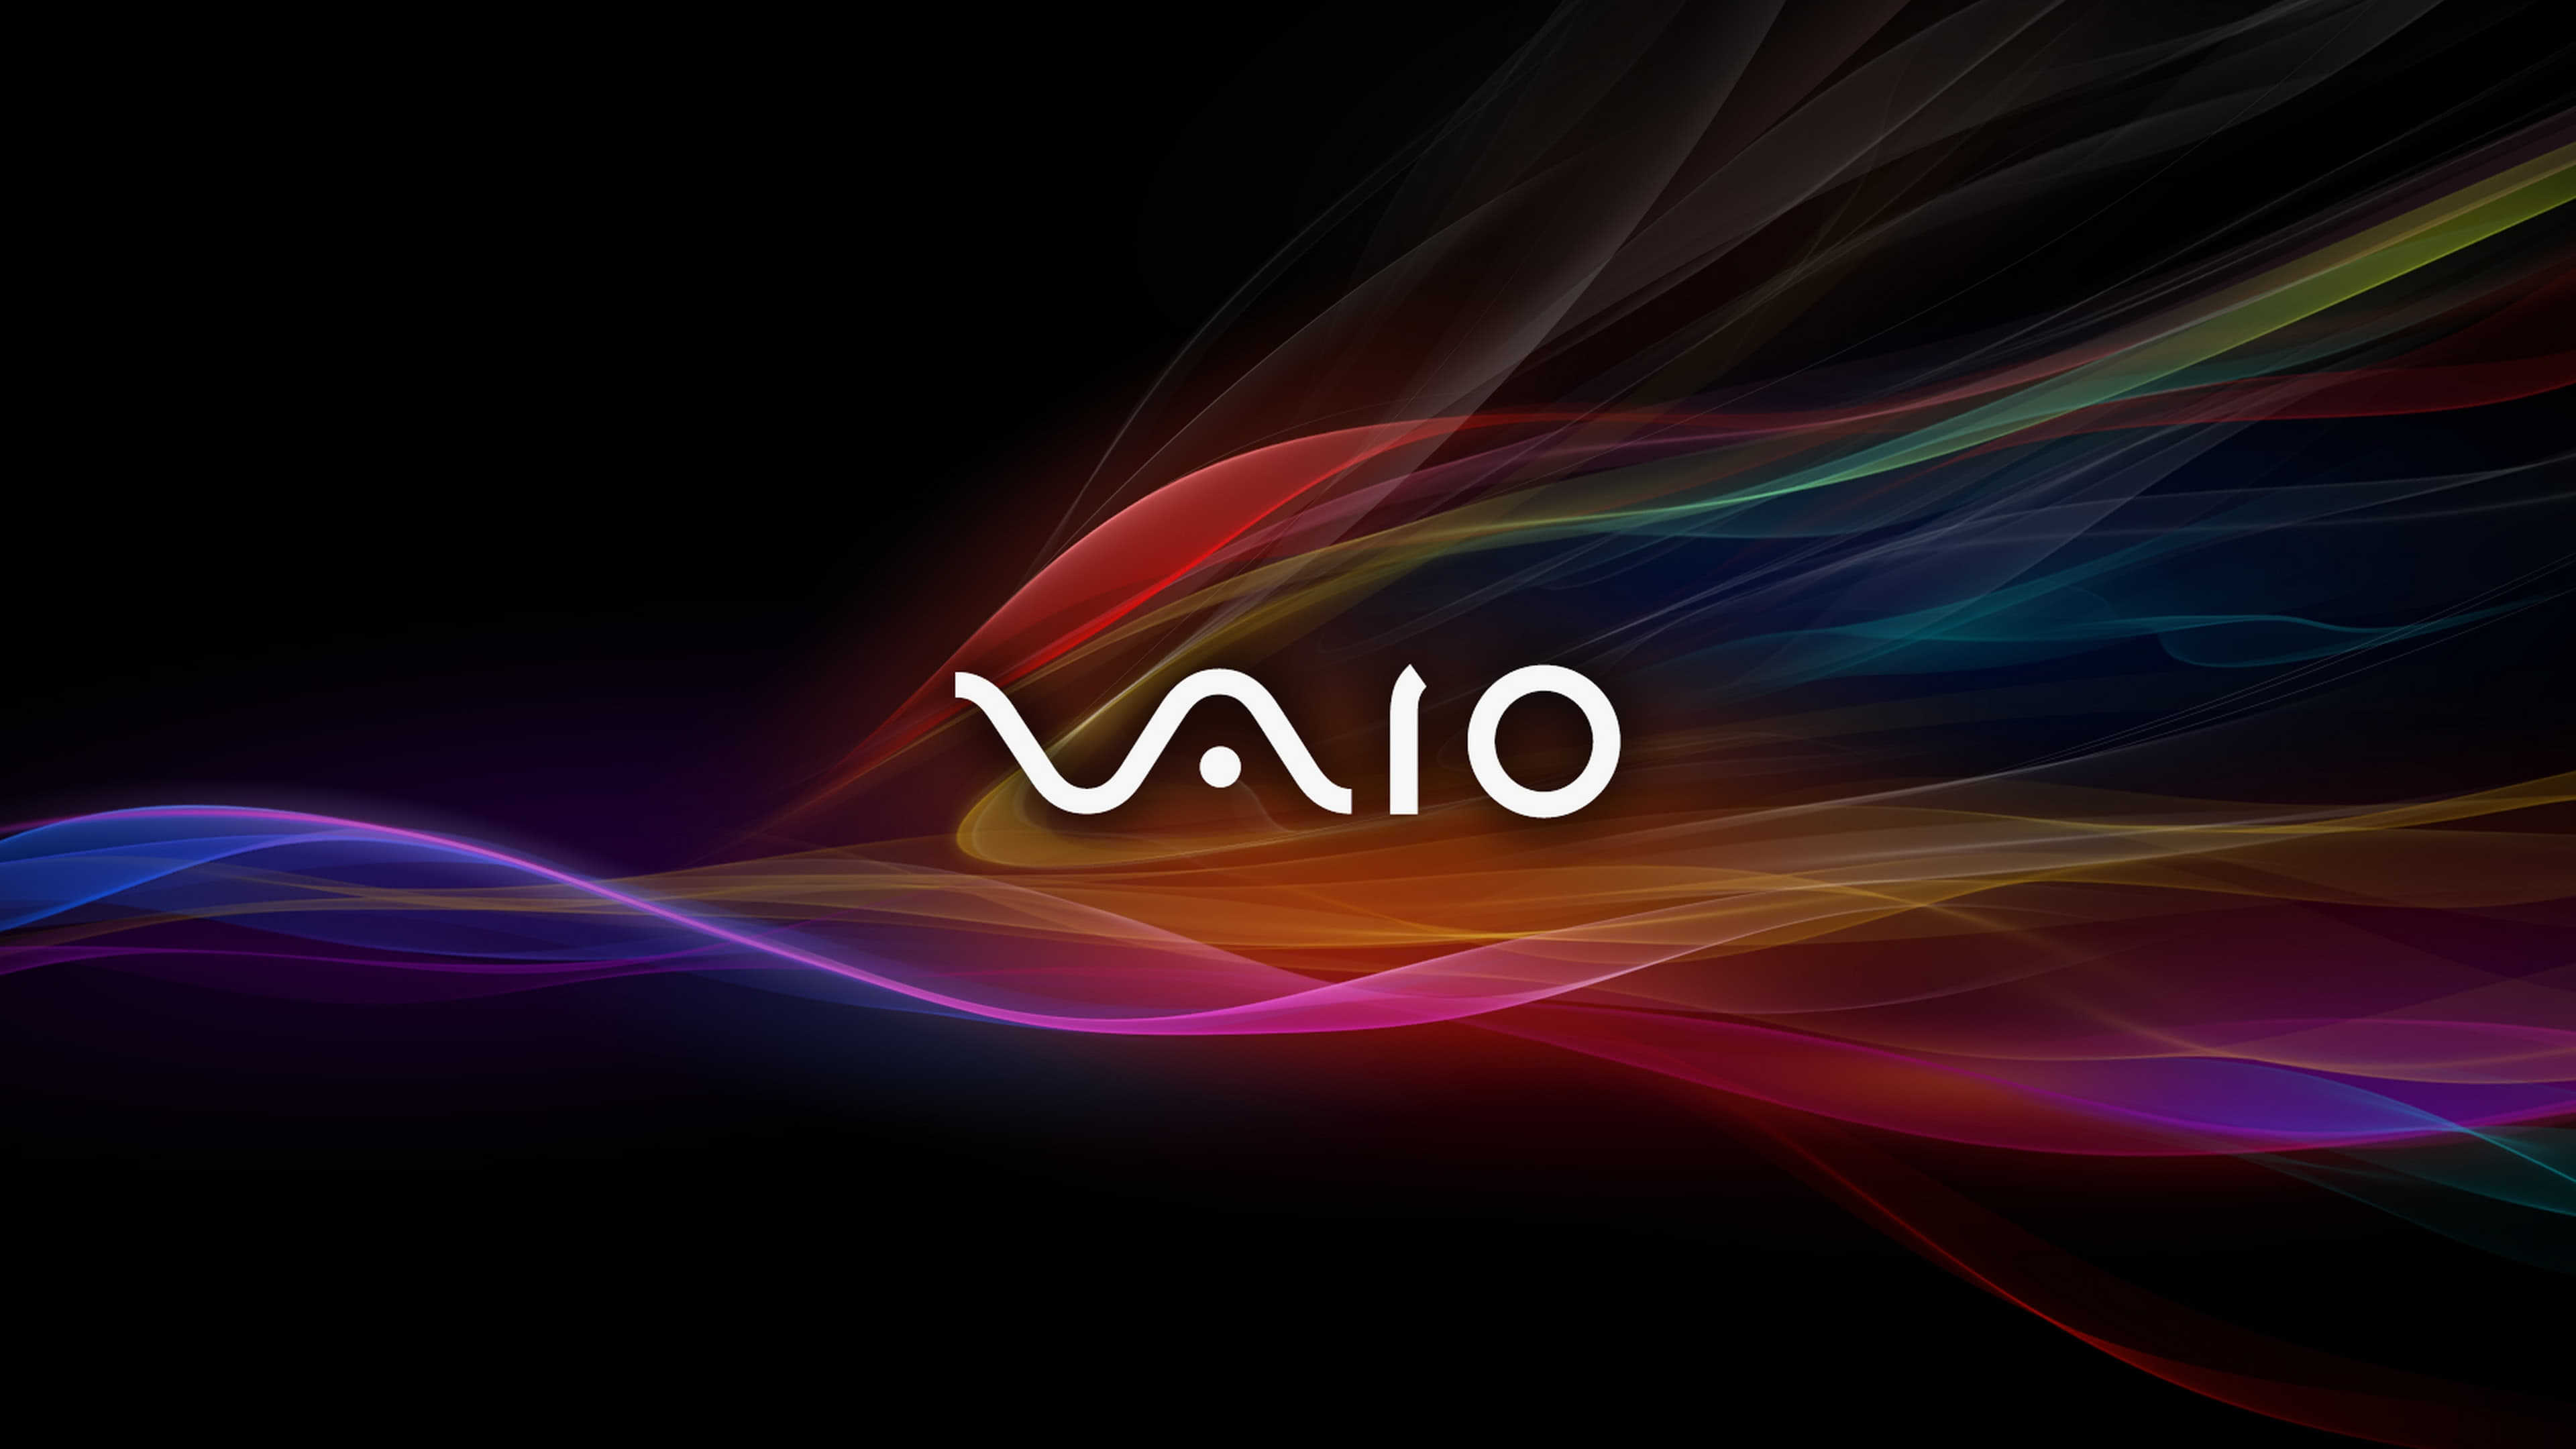 Sony Vaio Logo UHD 4K Wallpaper